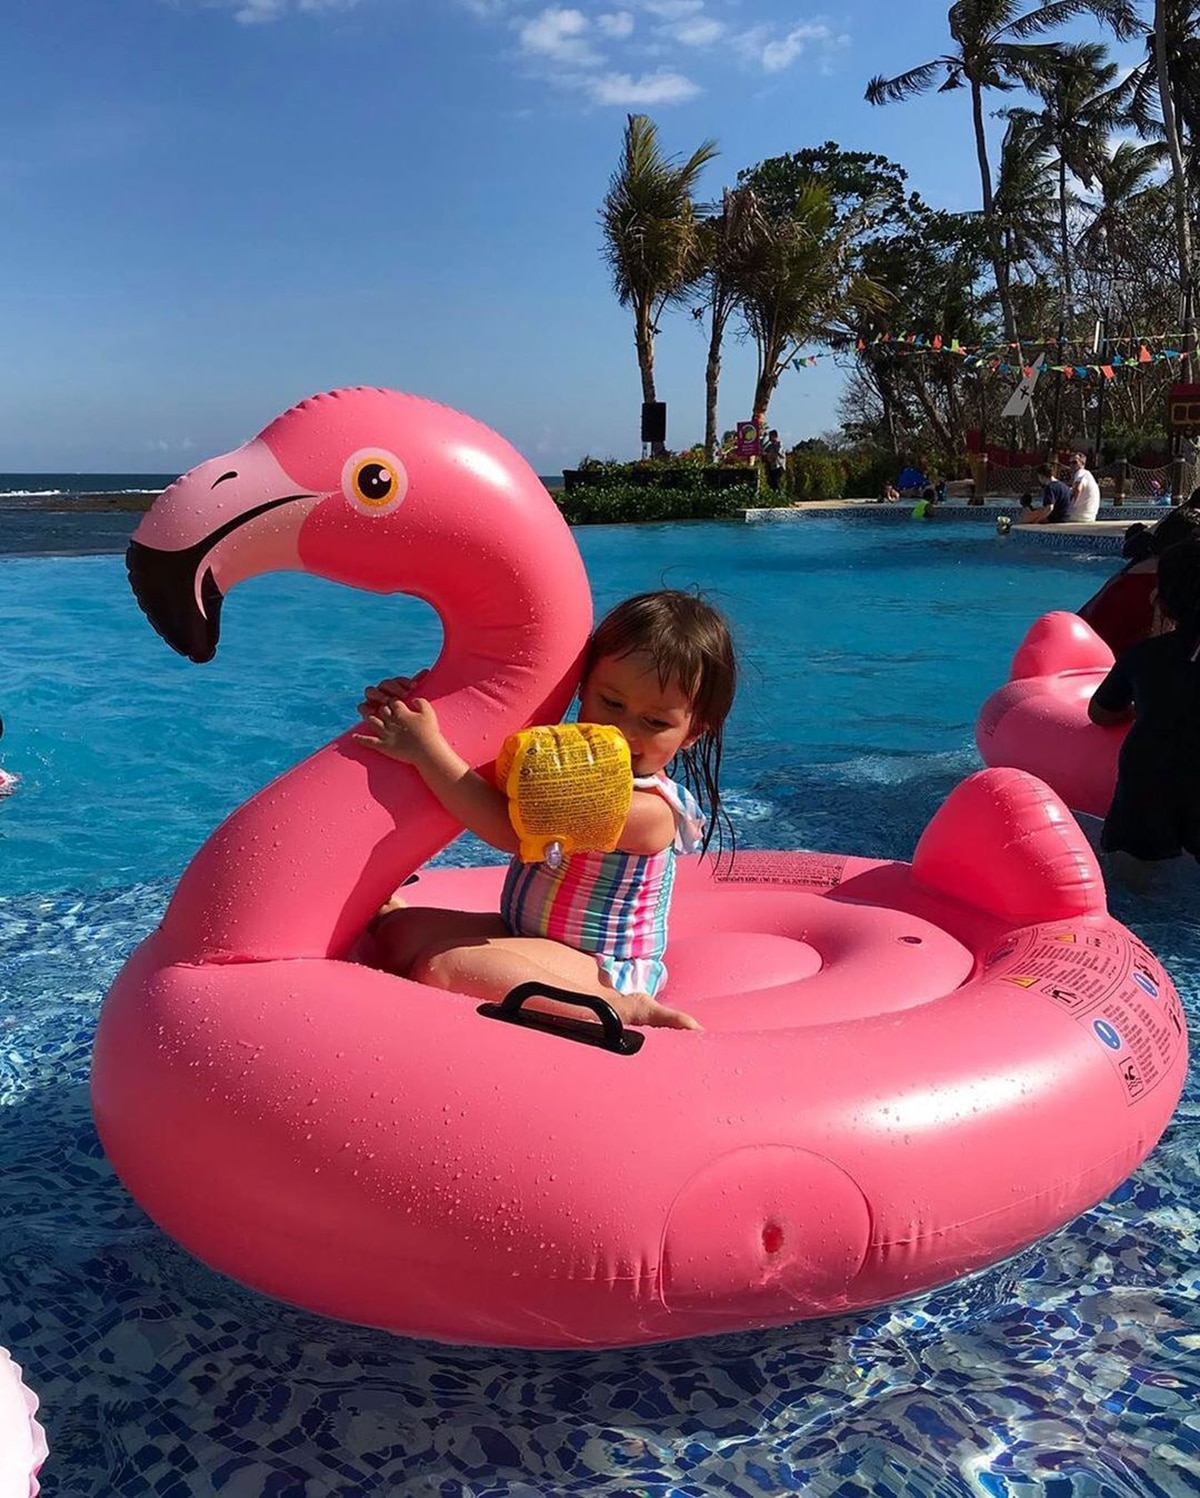 The Flamingo Bali